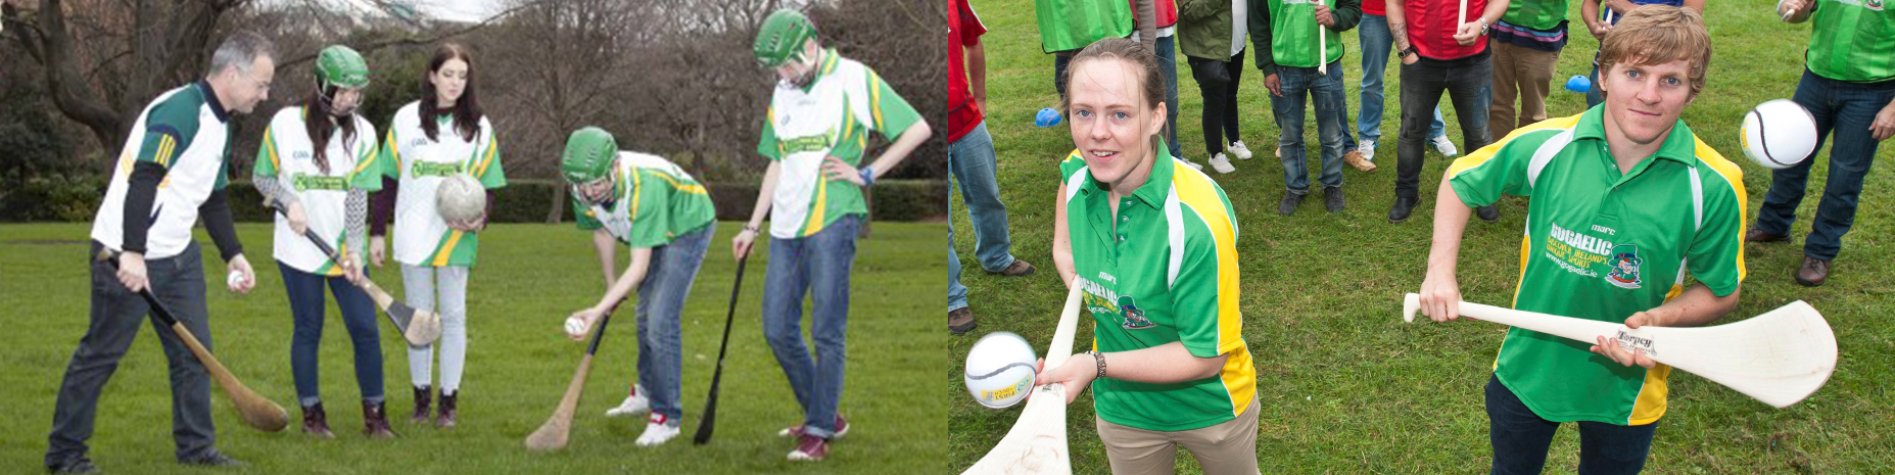 Gaelic Games Sports Experiences in Ireland